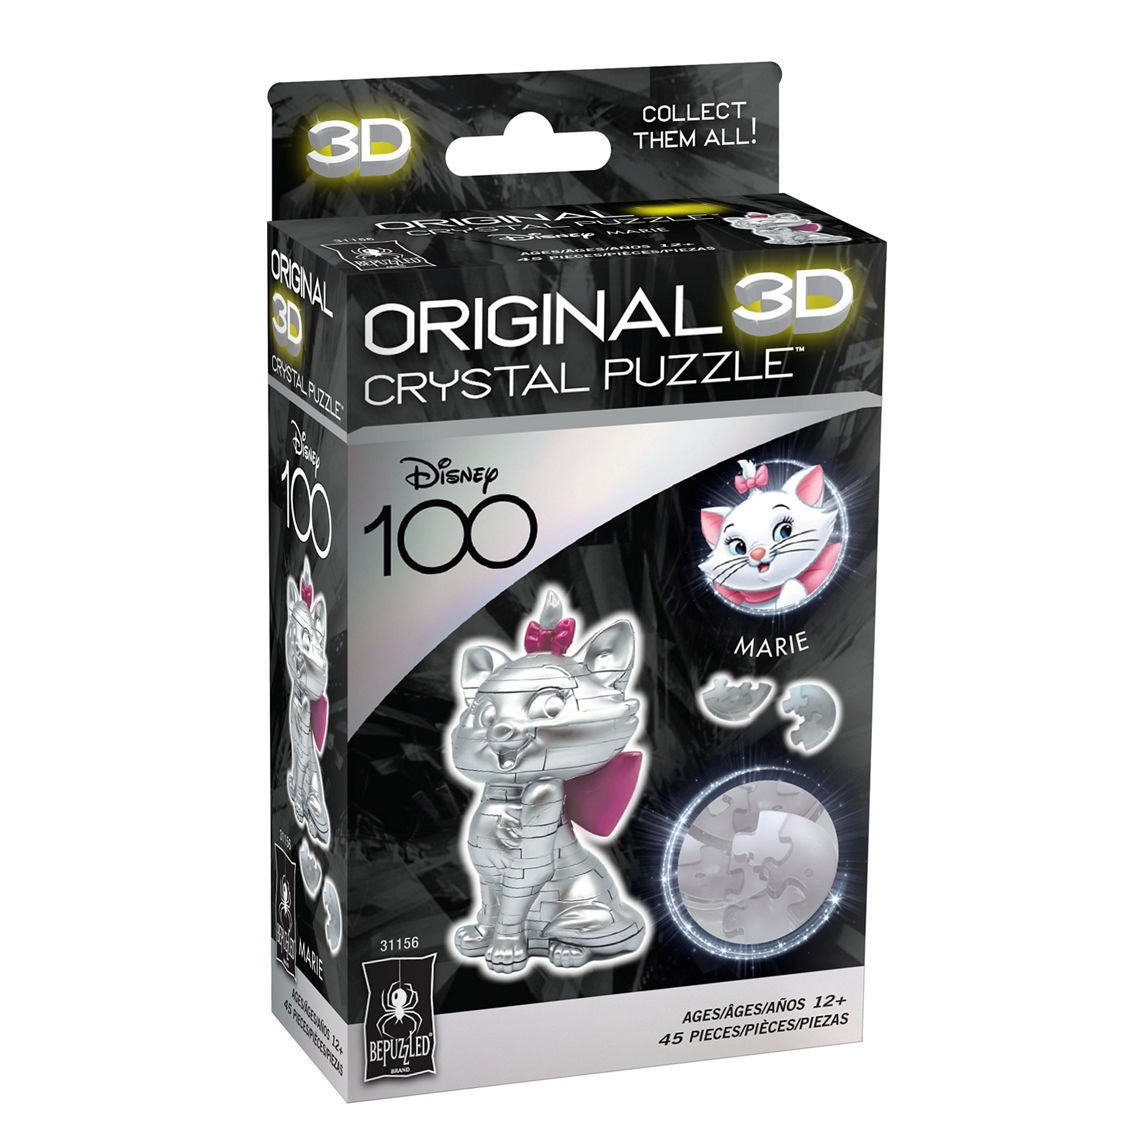 BePuzzled 3D Crystal Puzzle - Disney 100 Platinum Edition - Marie: 45 Pcs - Image 2 of 5